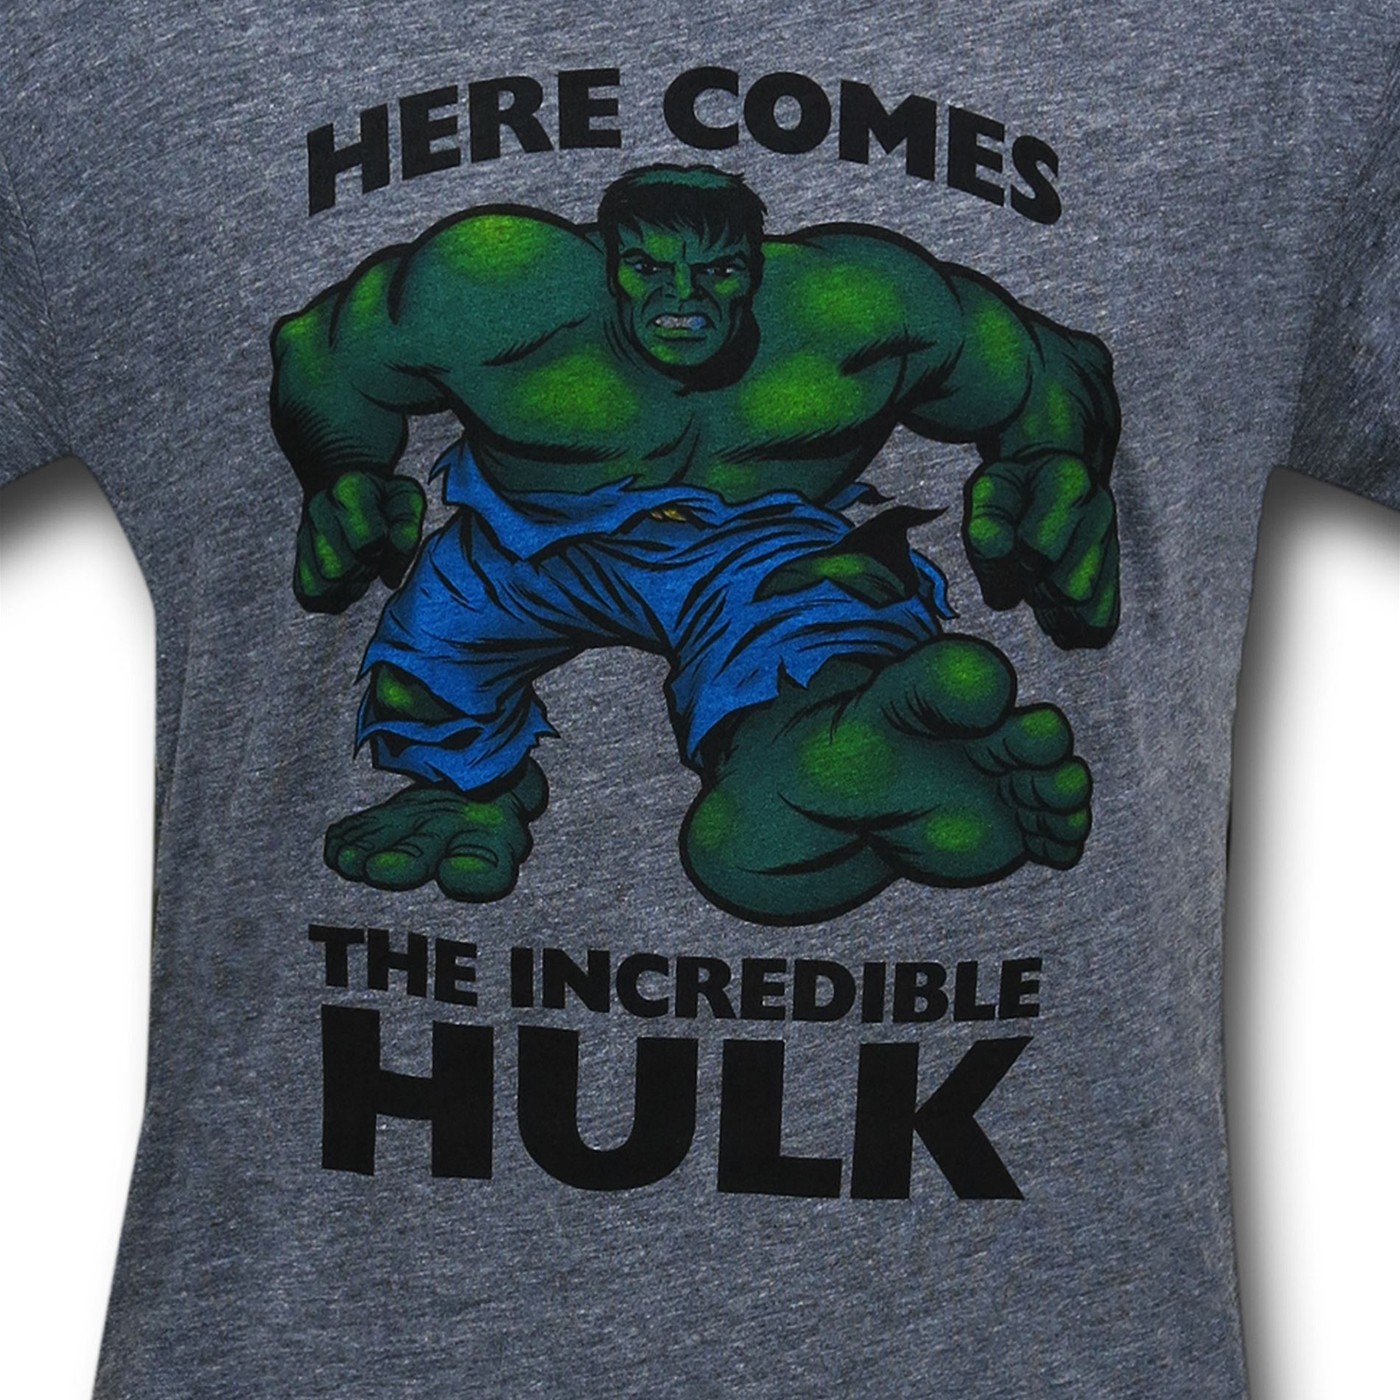 Hulk Double-Sided Heather Tri-Blend T-Shirt